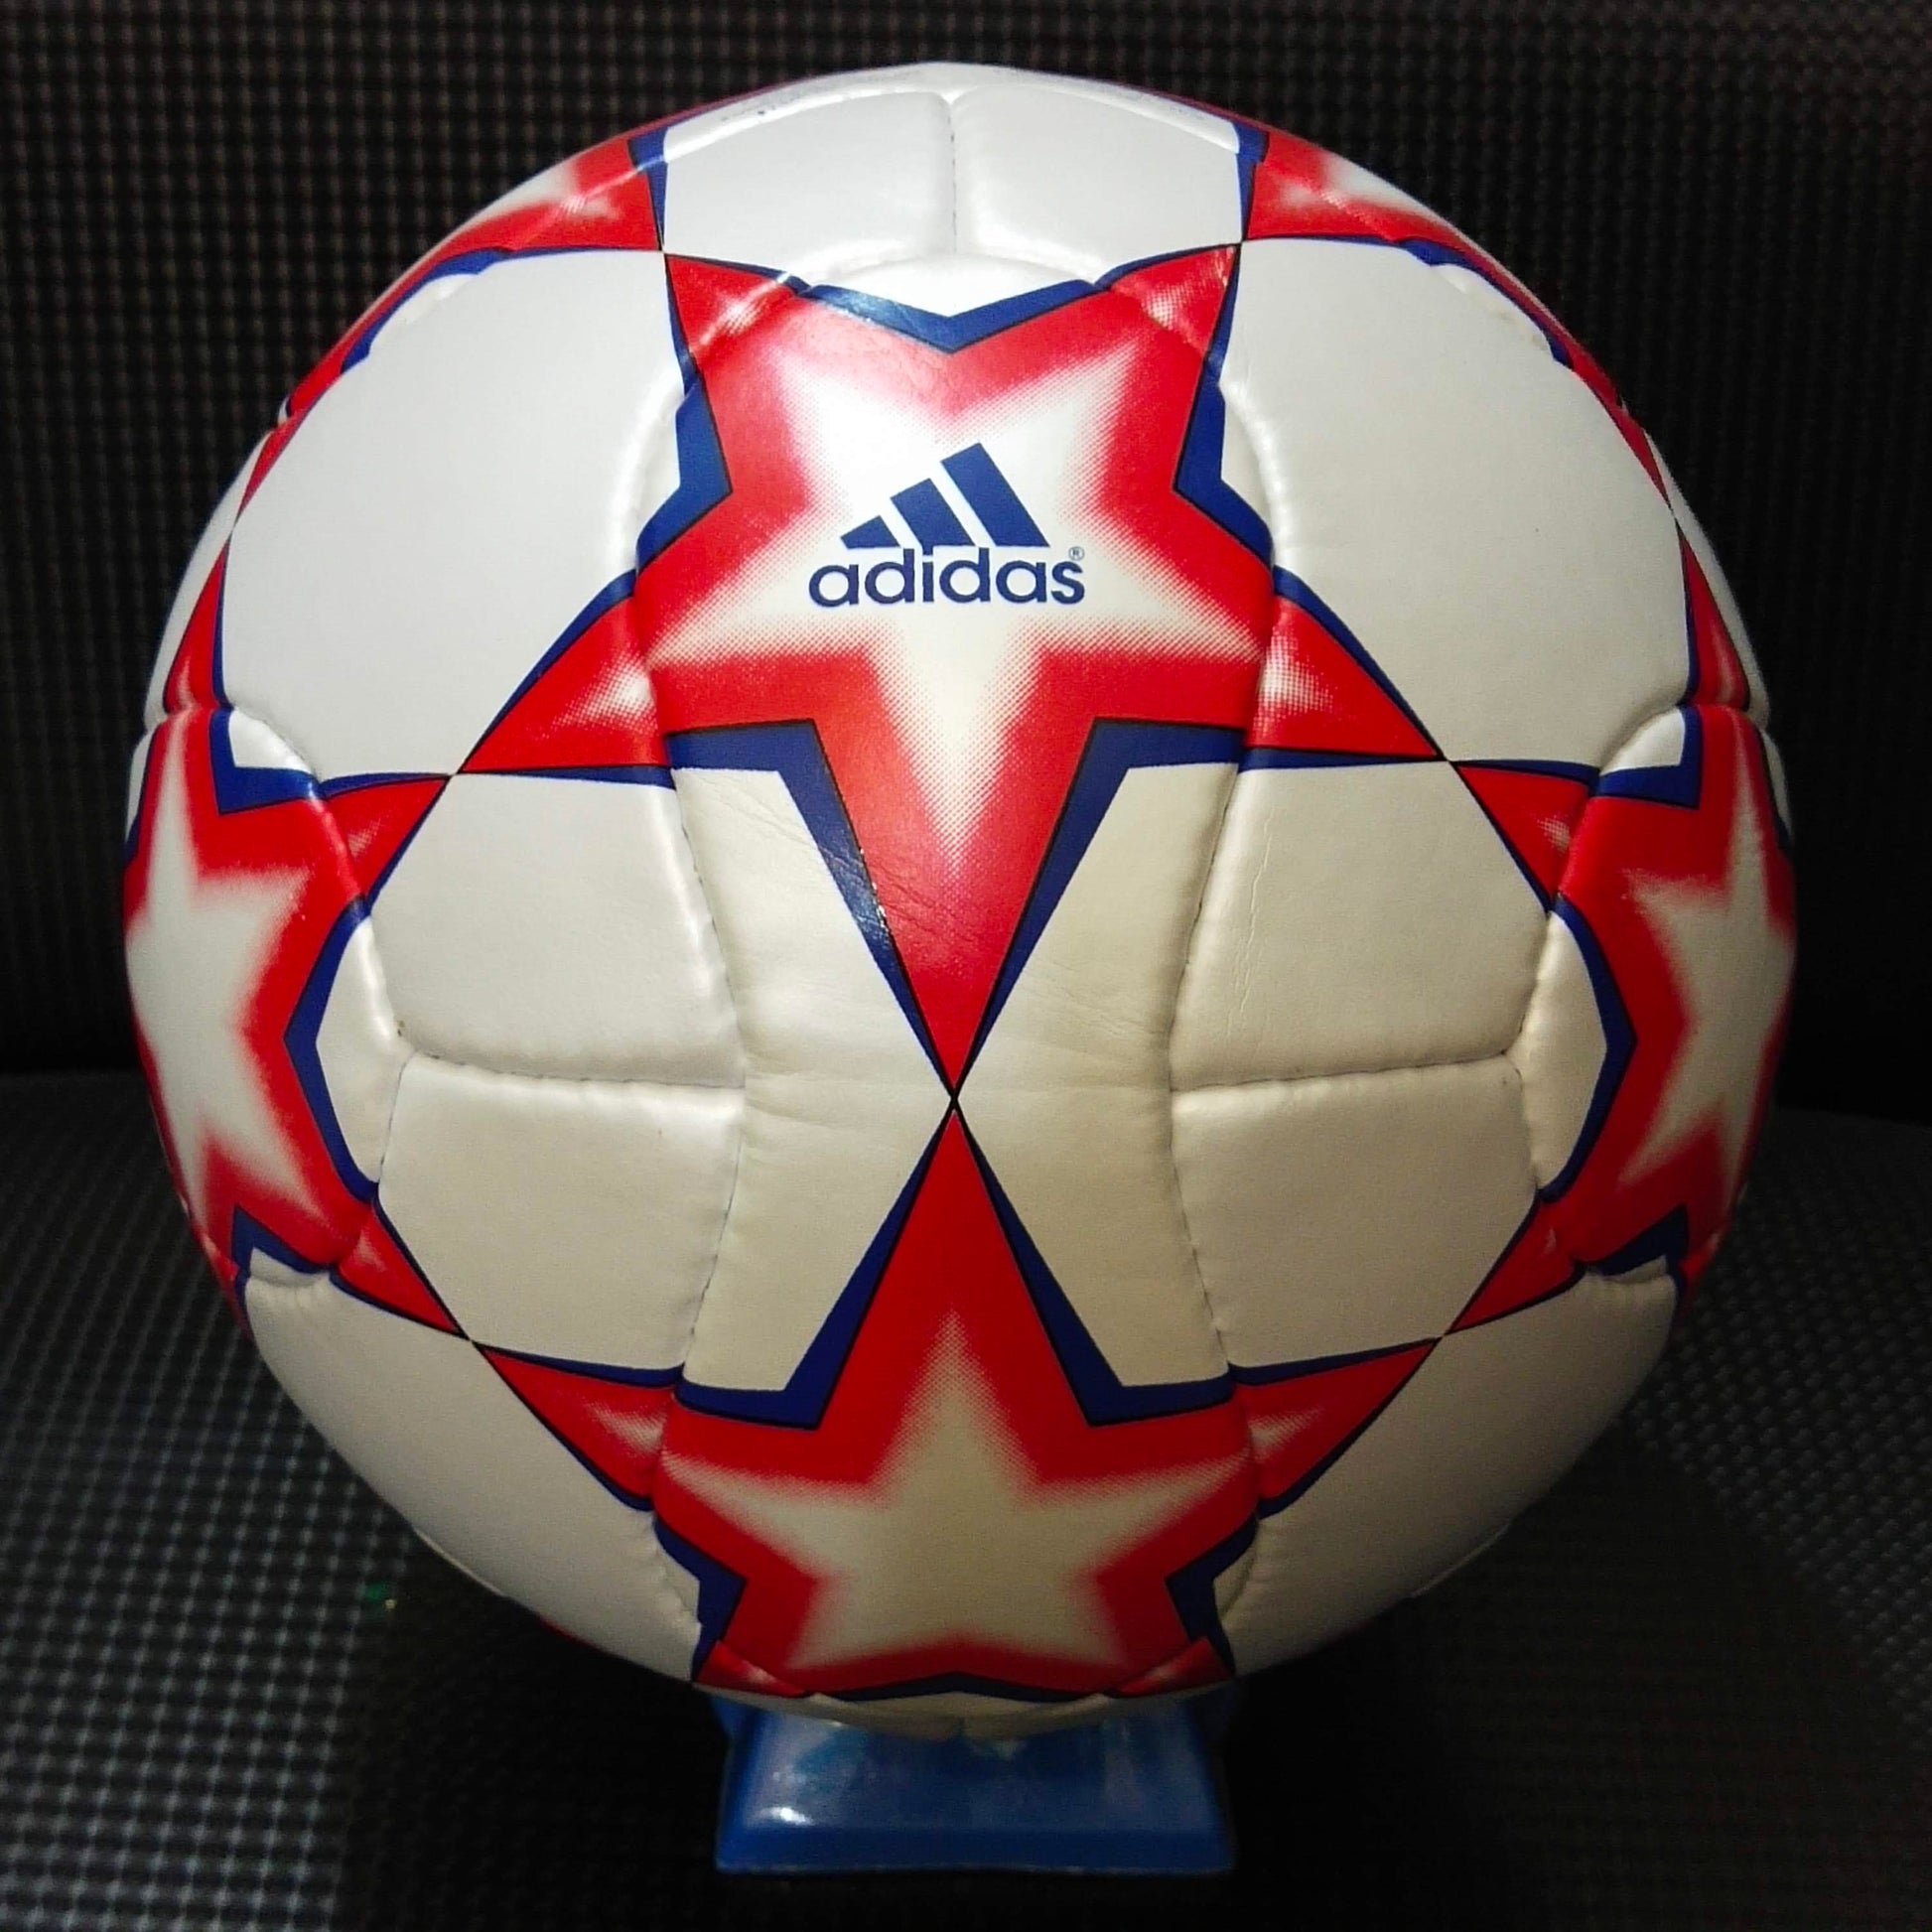 Adidas Finale Paris | Final Ball | 2005-2006 | UEFA Champions League Ball | Size 5 05